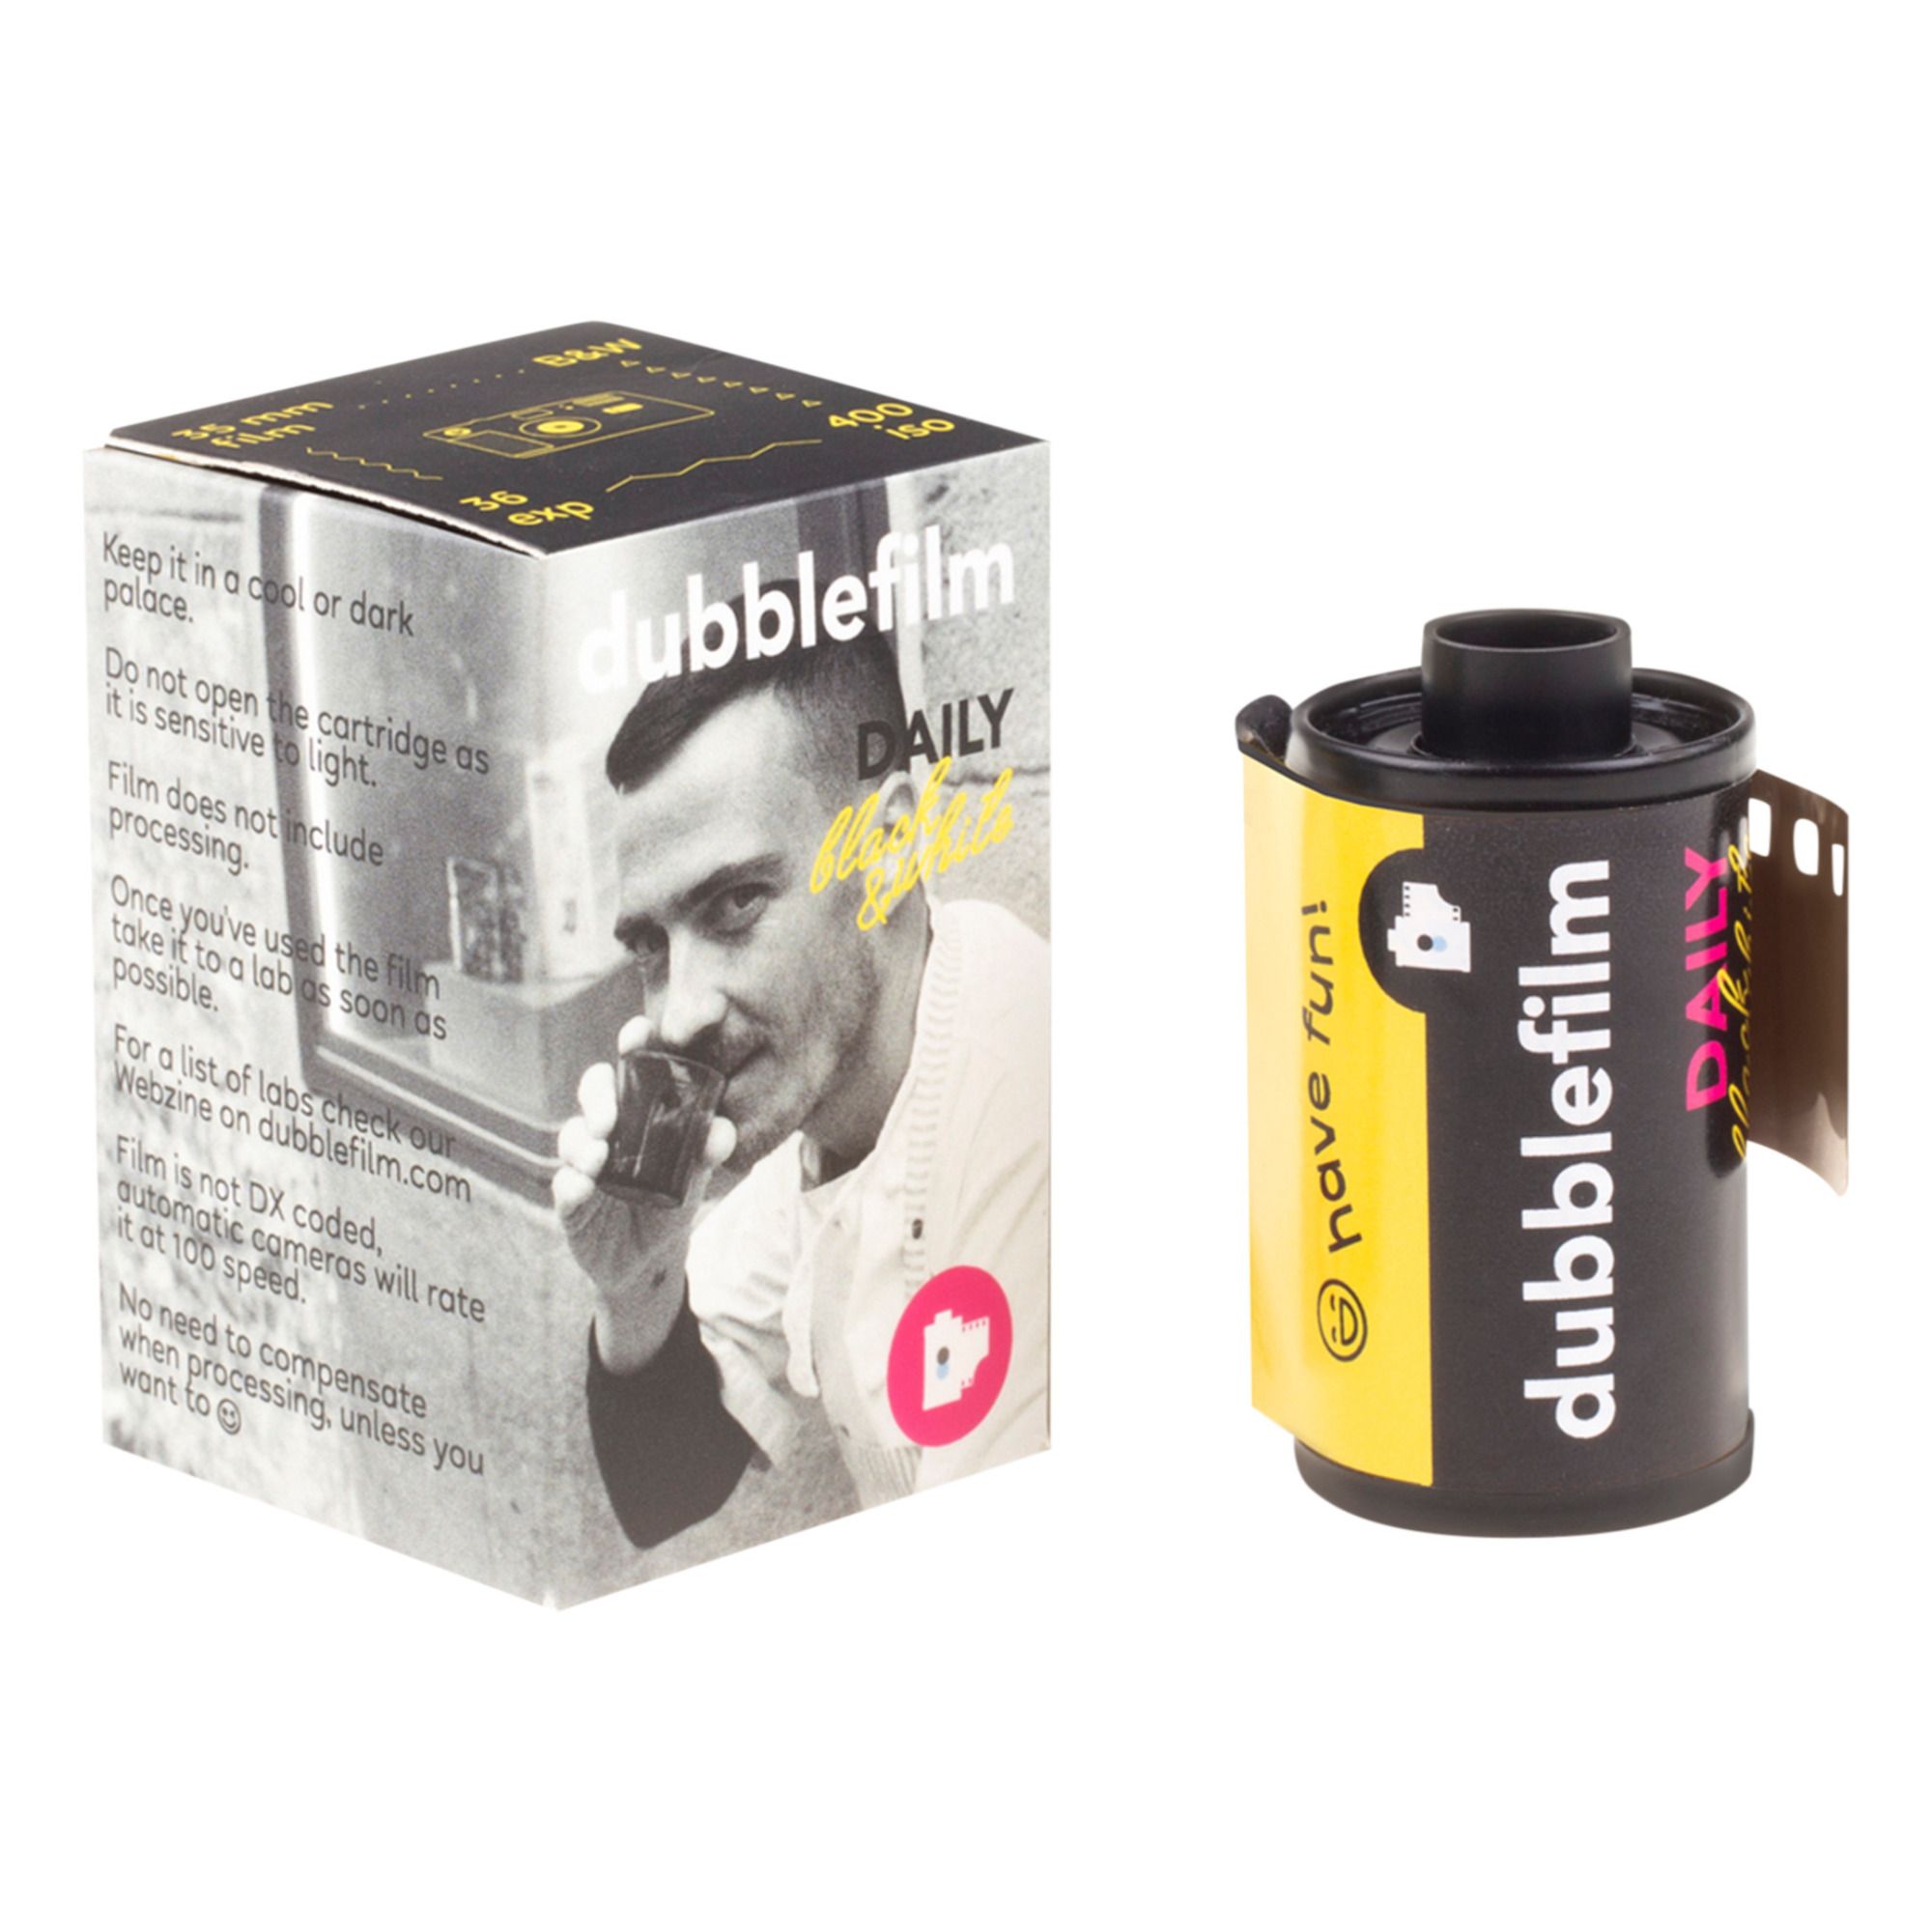 Dubblefilm - Pellicule B&W Iso 400 - Fille - Multicolore